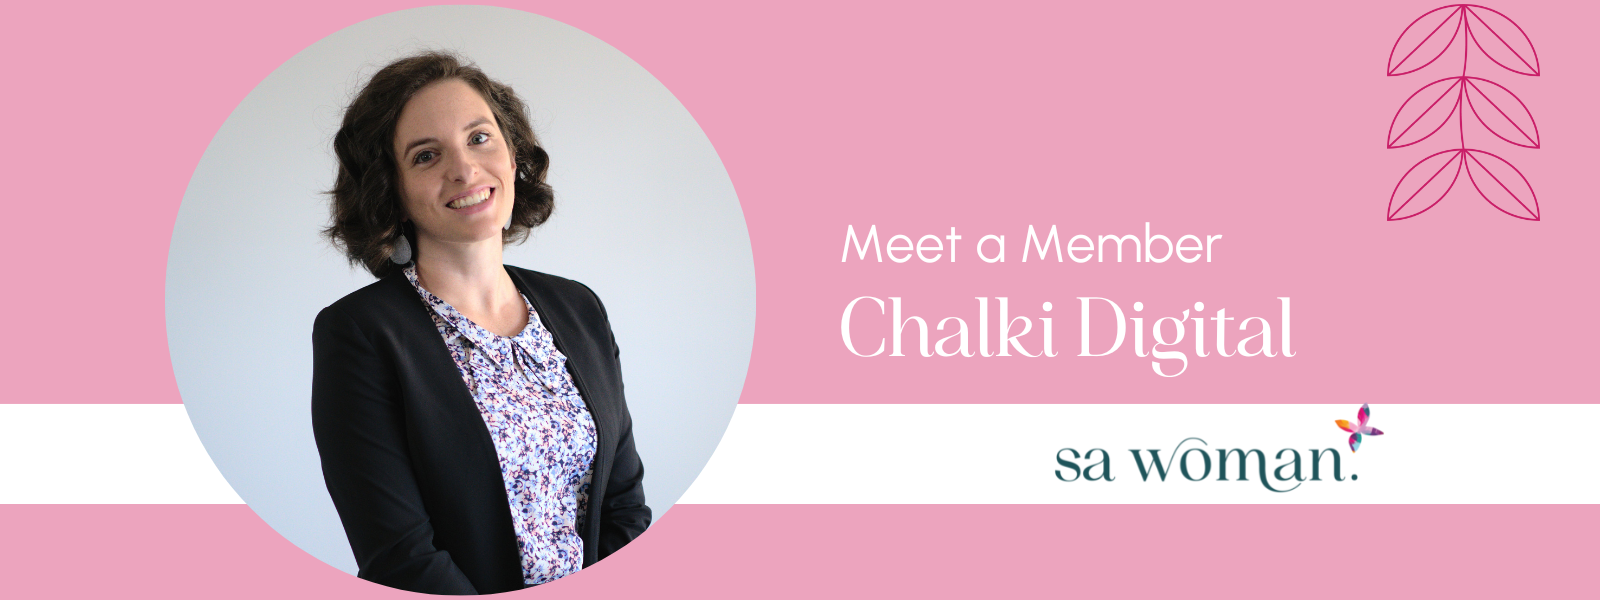 Meet a Member: Clair Halkias – Chalki Digital